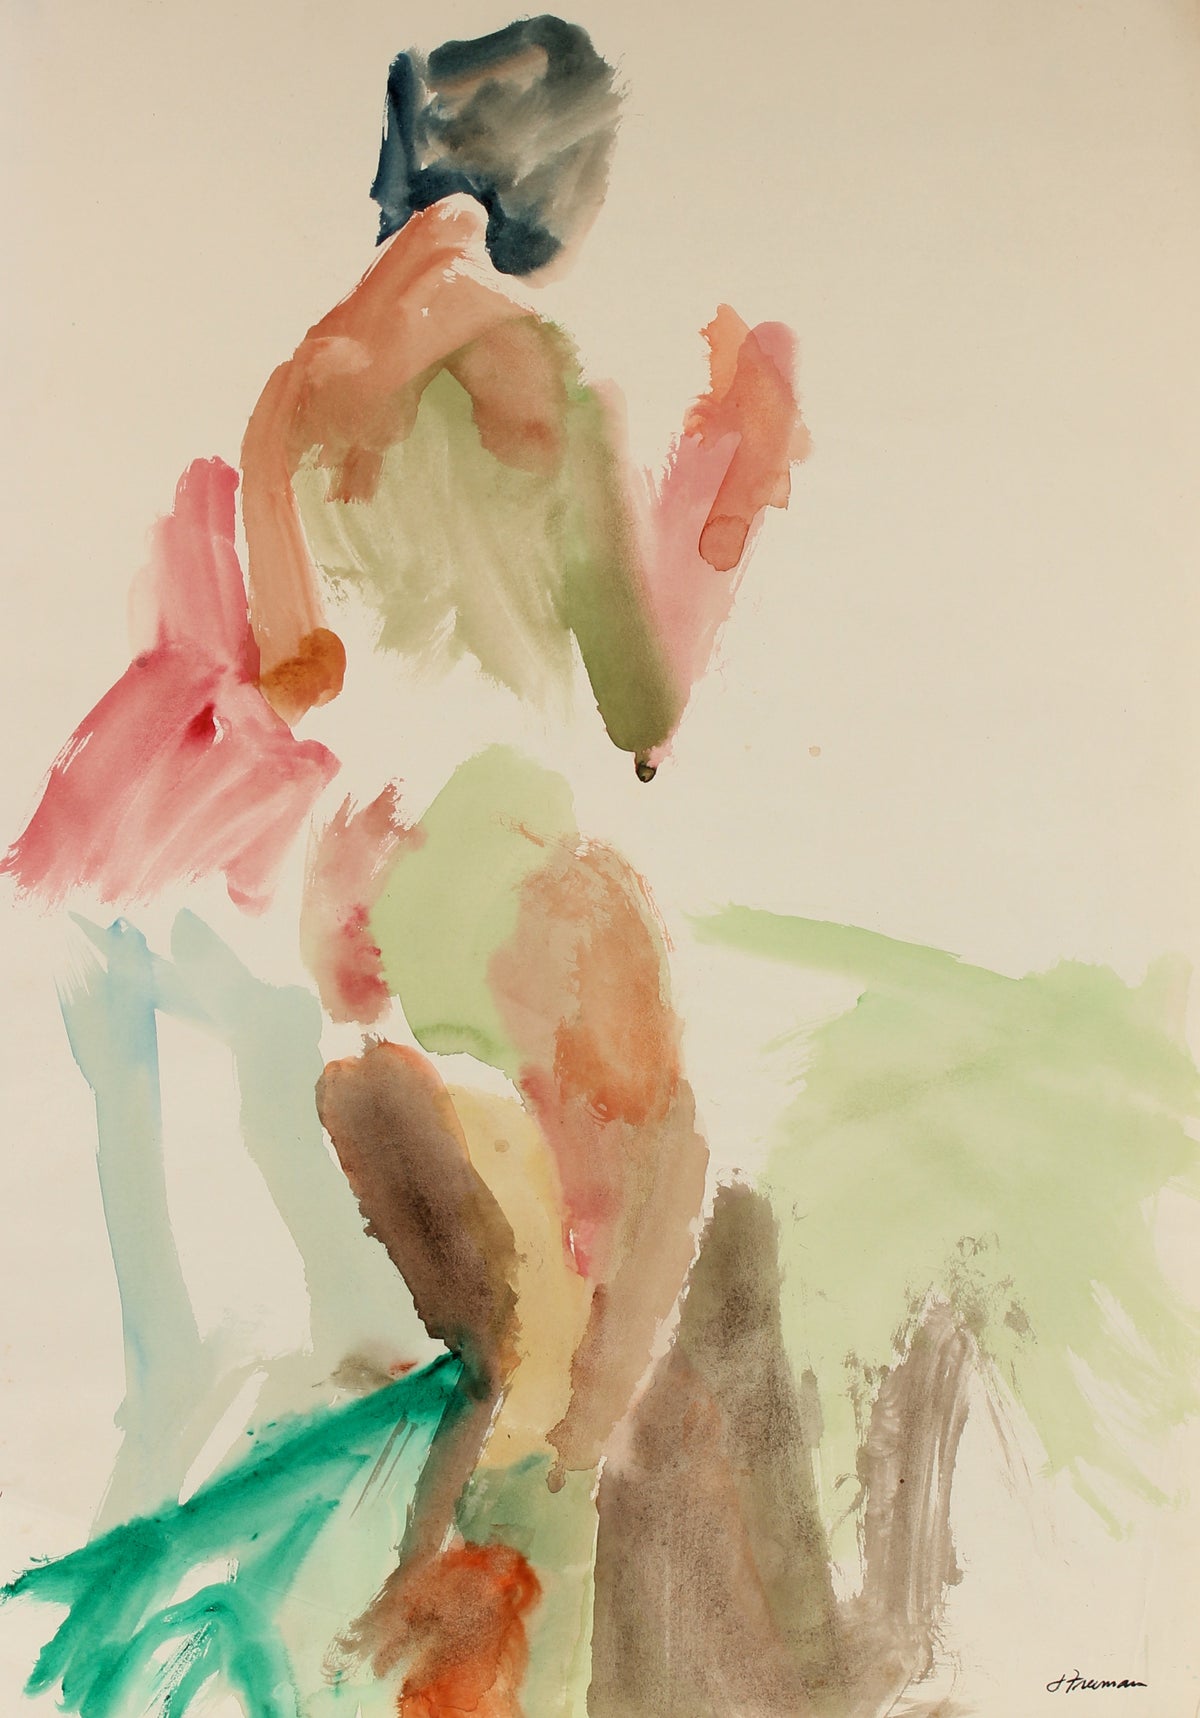 Posterior View of Nude Figure &lt;br&gt;1960s Watercolor &lt;br&gt;&lt;br&gt;#88969